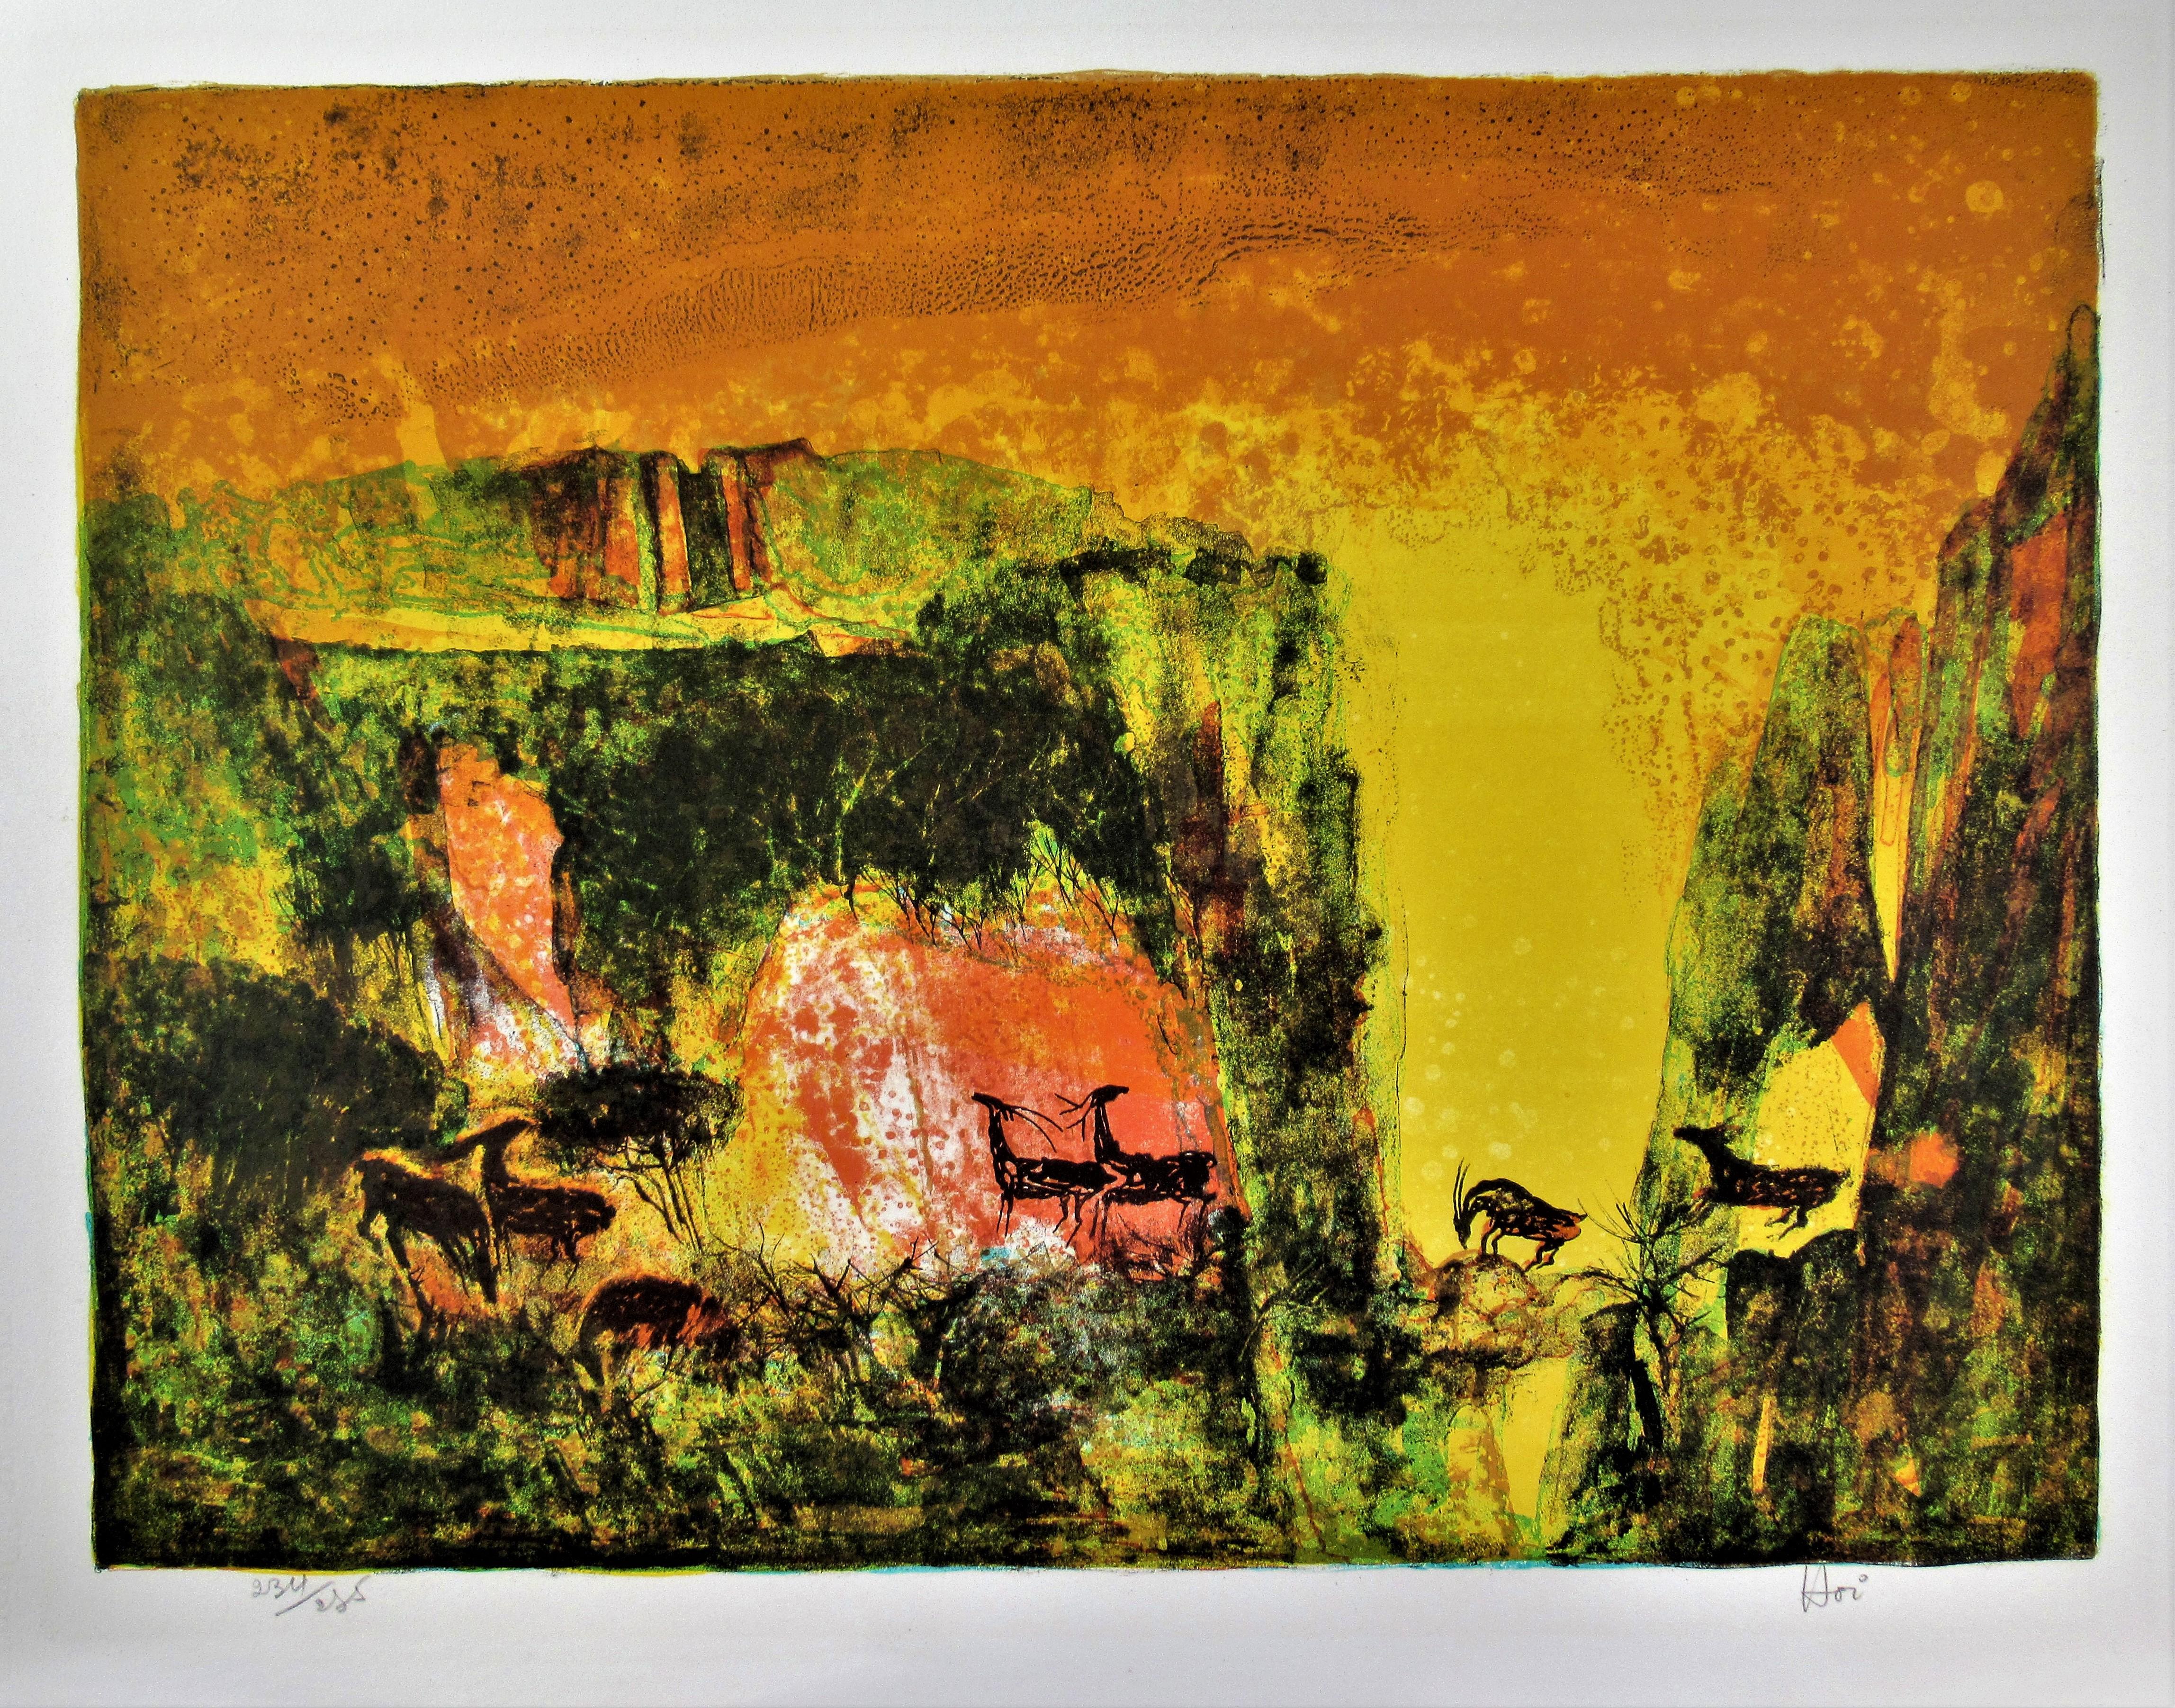 Hoi Lebadang Animal Print - Landscape with Deer Herds